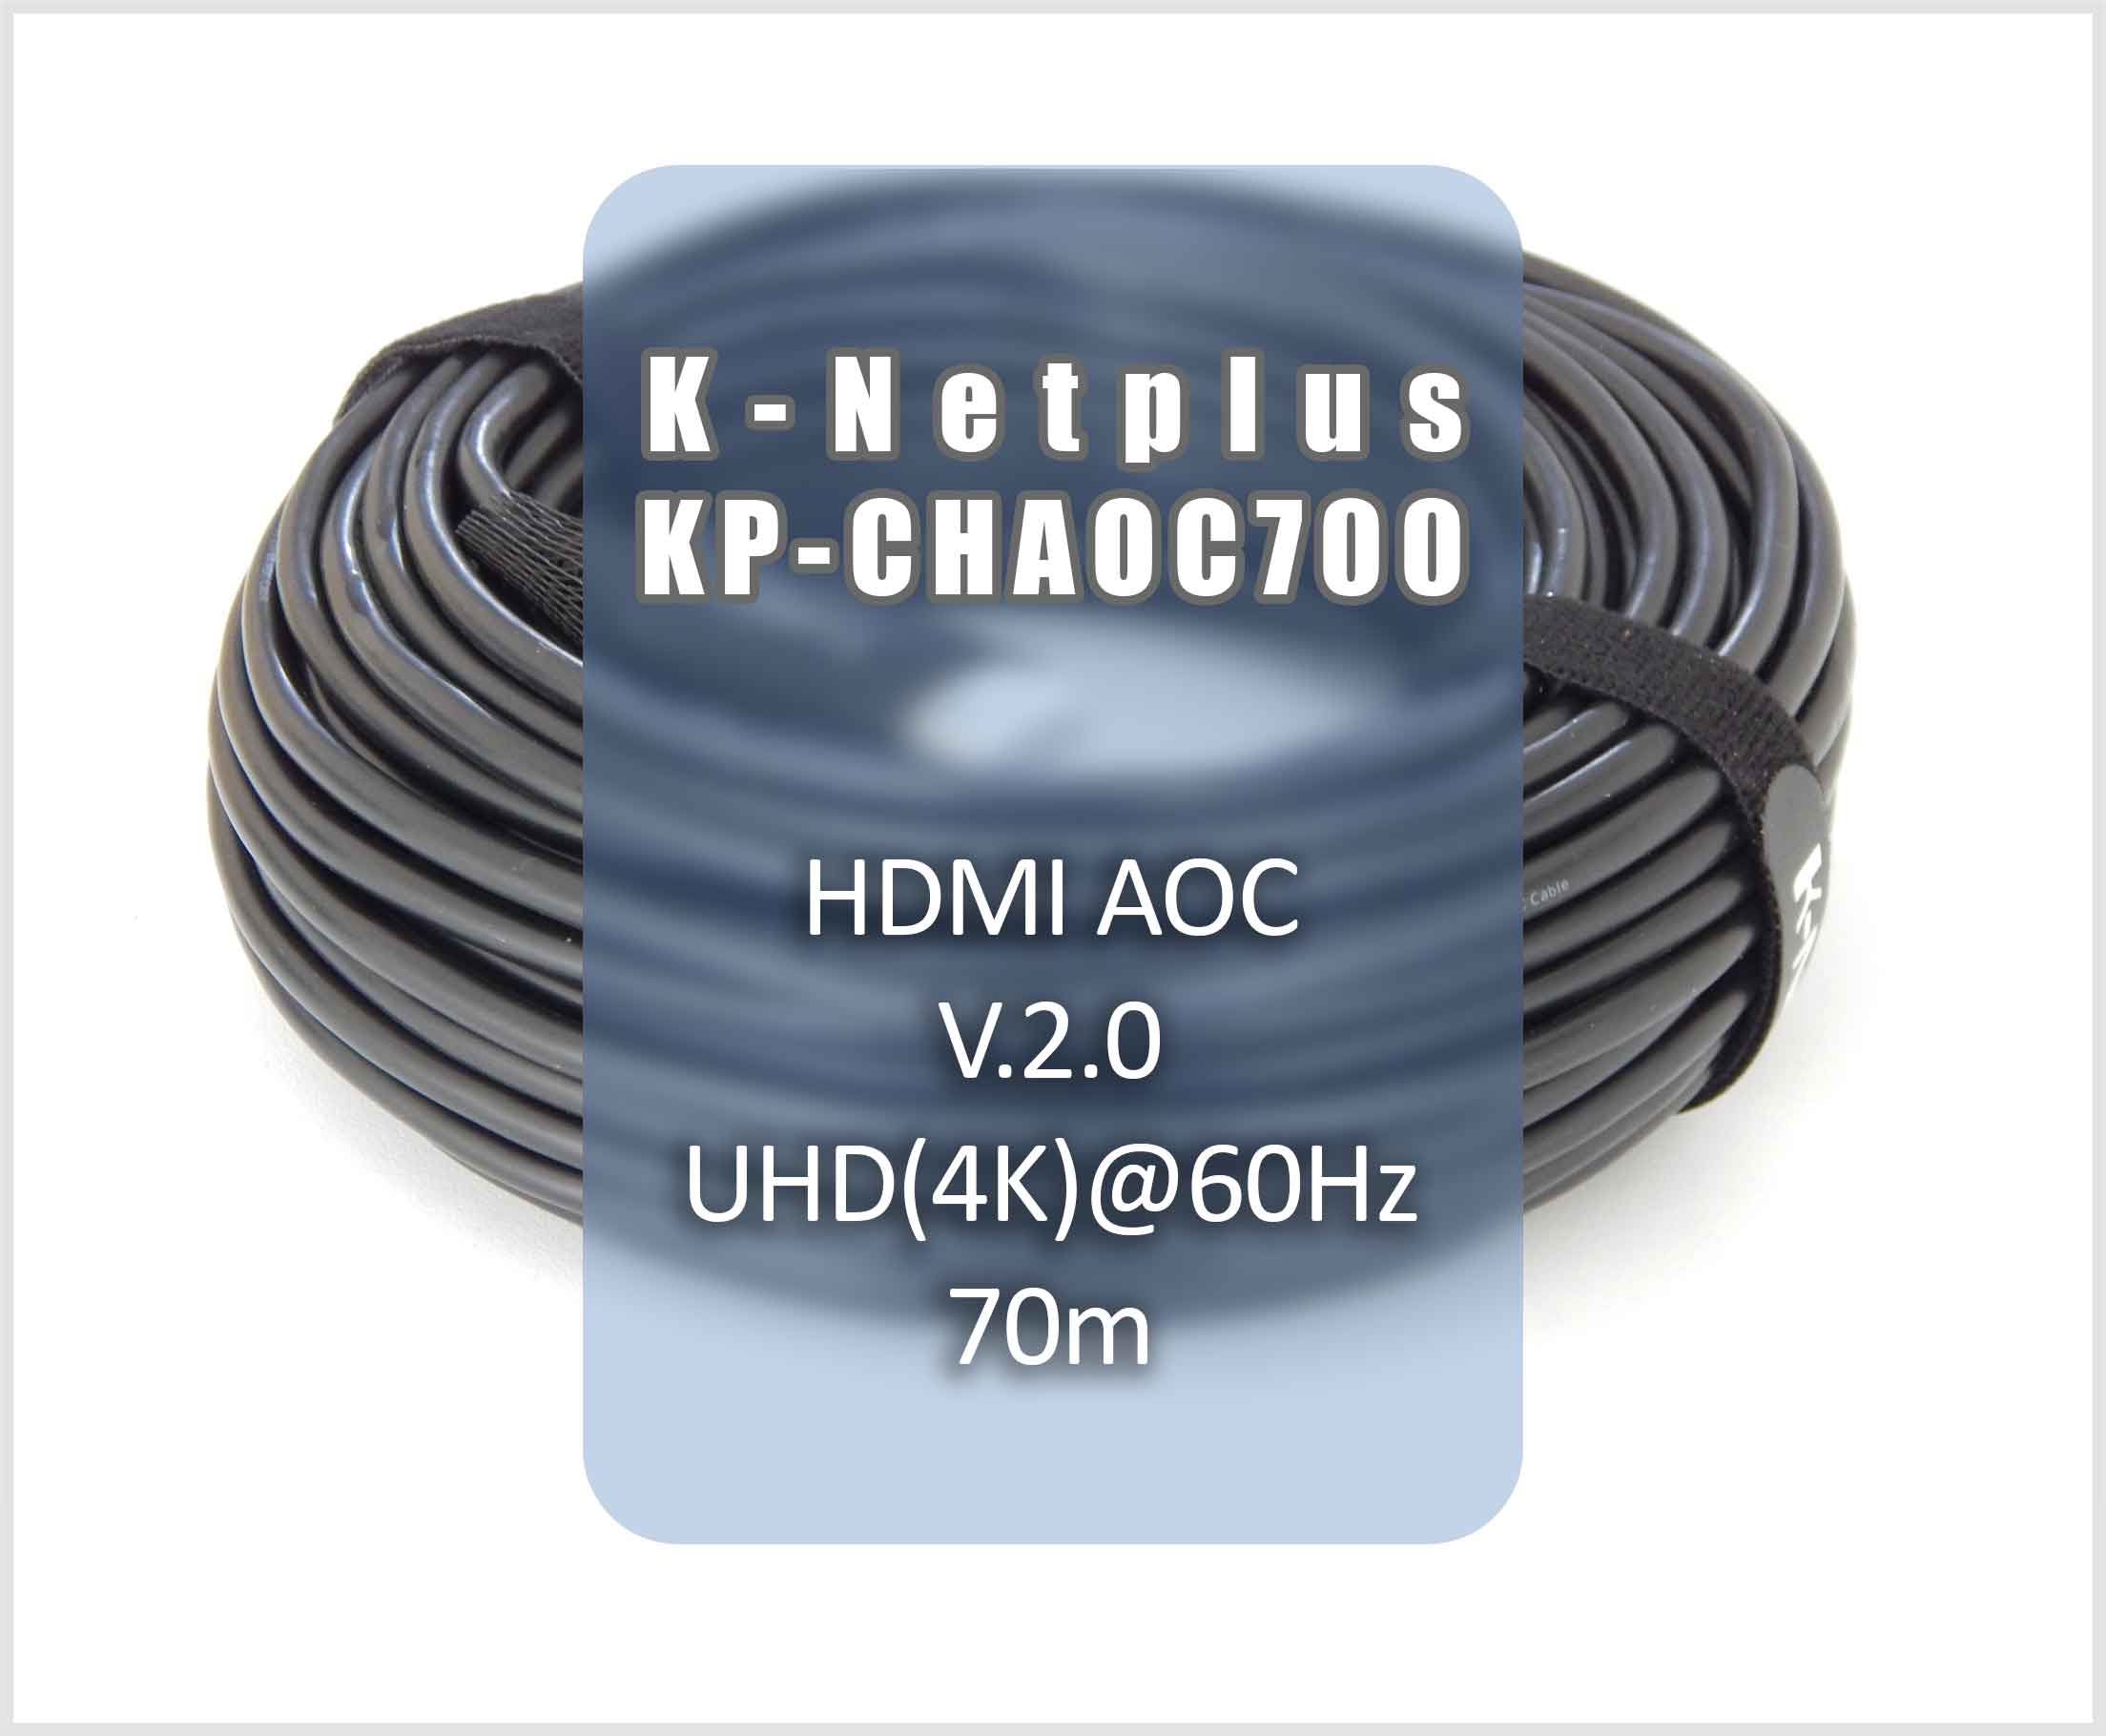 کابل HDMI AOC کی نت پلاس k-netplus KP-CHAOC700 ورژن 2.0 طول 70 متر - شبکه ساز